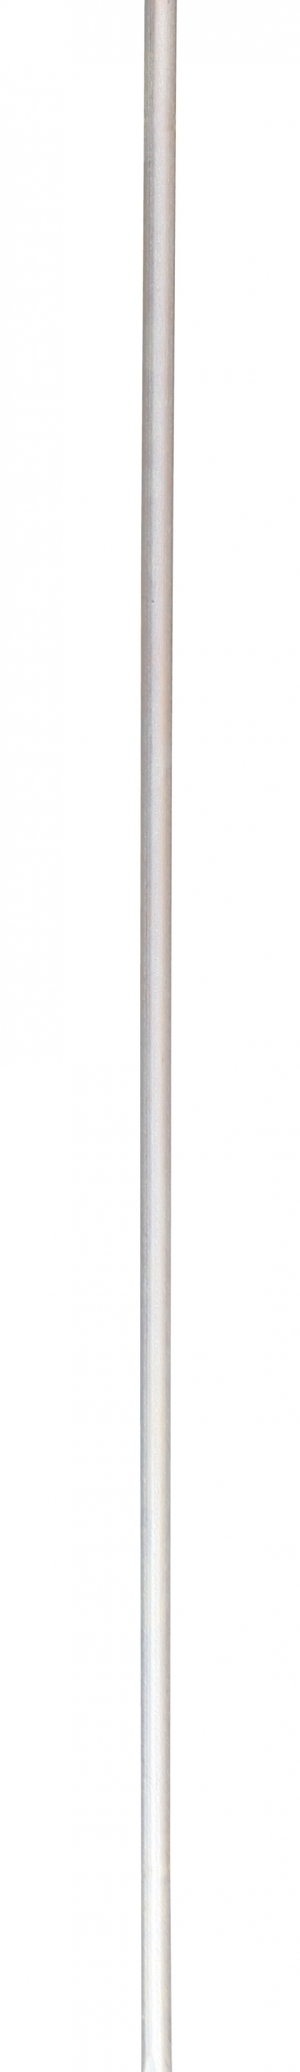 Kołek uziemiający, 1 m 12 mm, bez zacisku